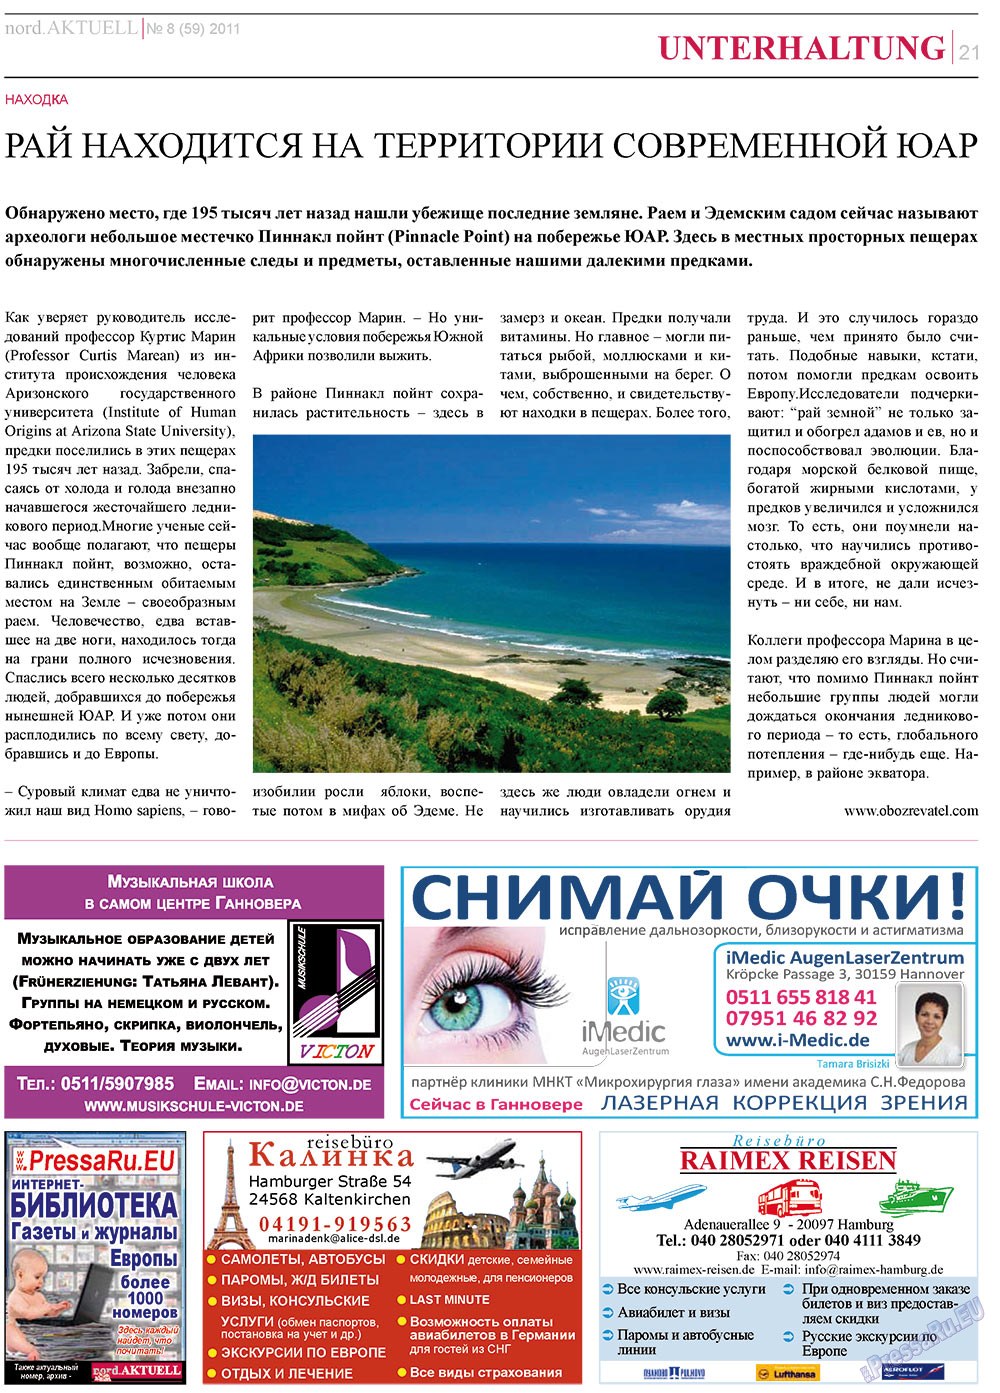 nord.Aktuell (газета). 2011 год, номер 8, стр. 21